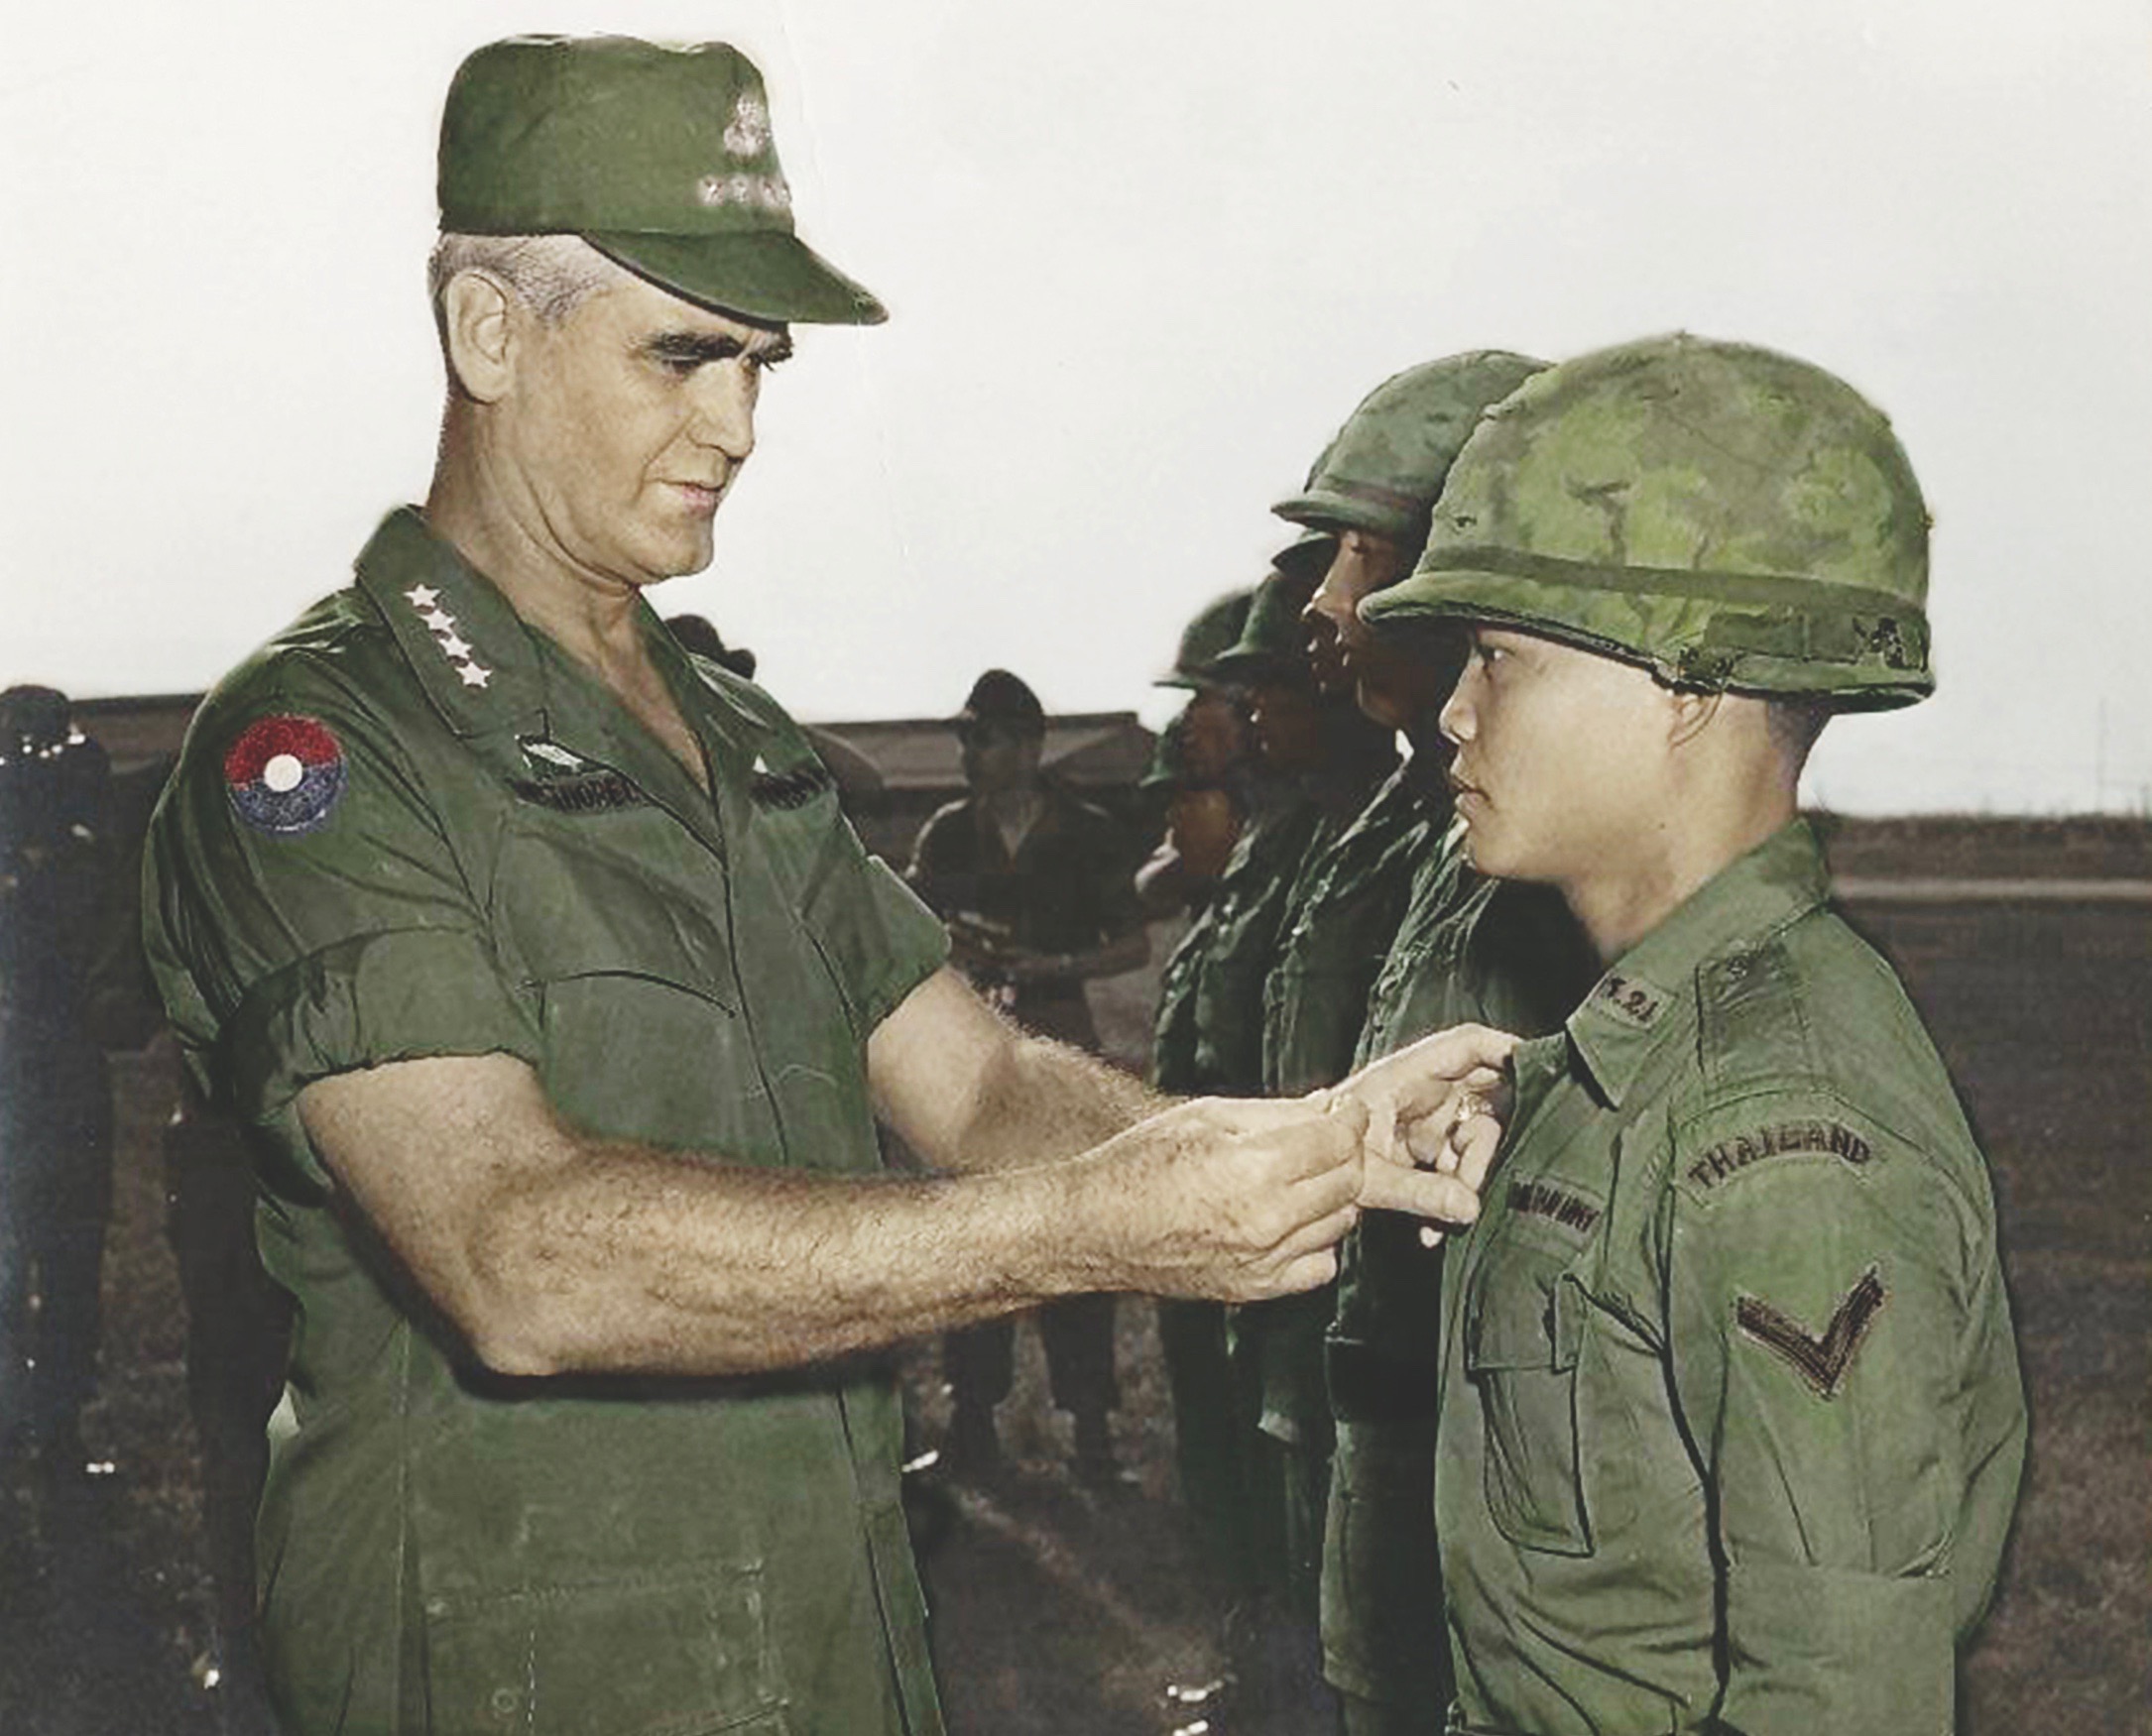 Gen. William Westmoreland, the top U.S. commander in South Vietnam, awards a Thai soldier in 1968. (U.S. Army)